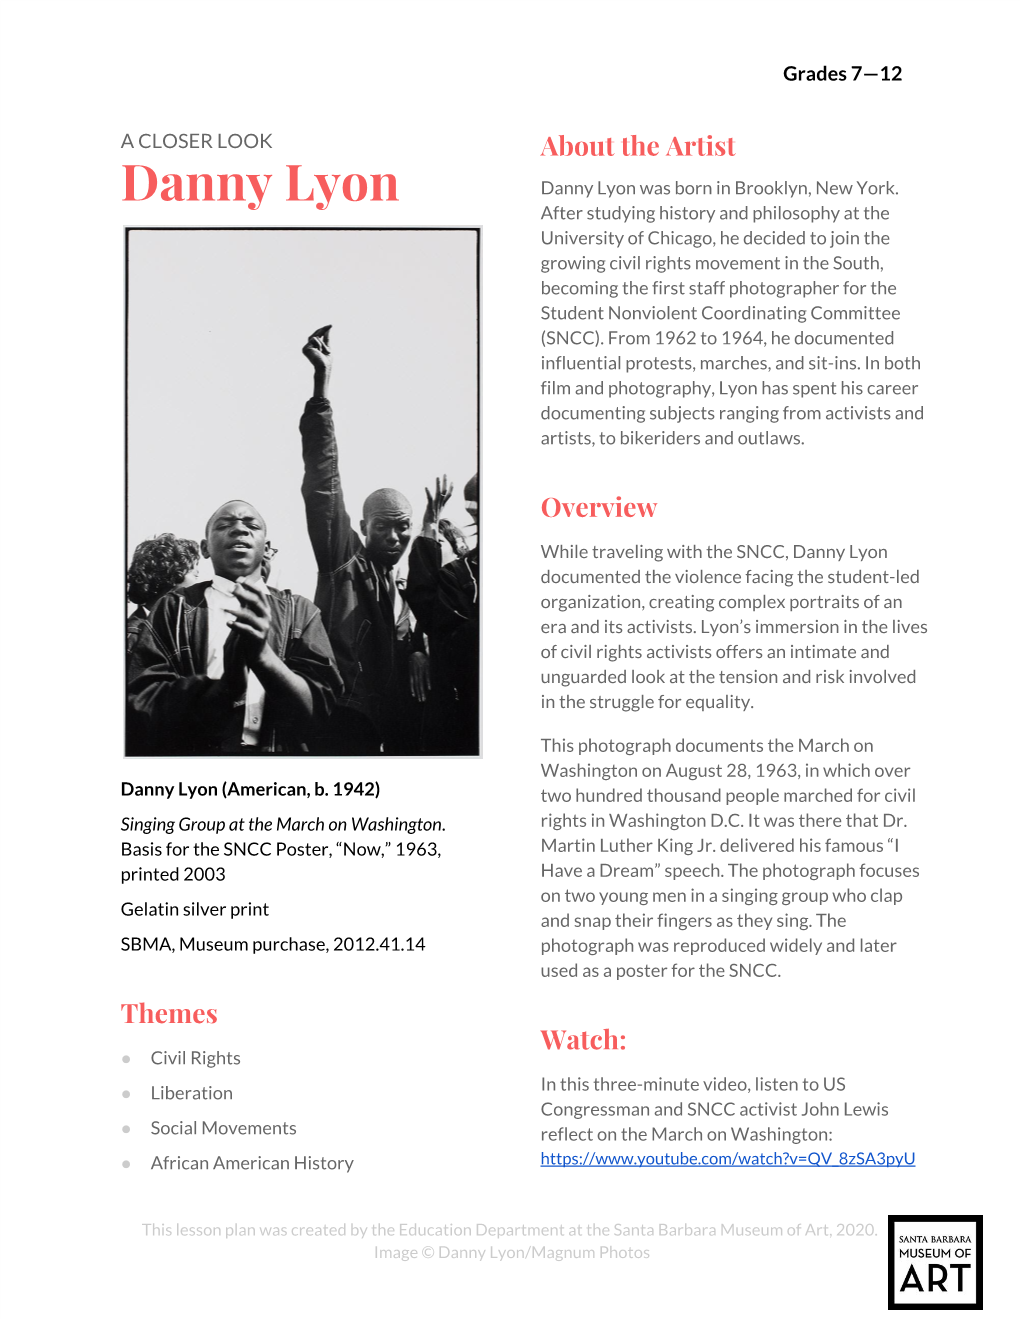 Danny Lyon Was Born in Brooklyn, New York